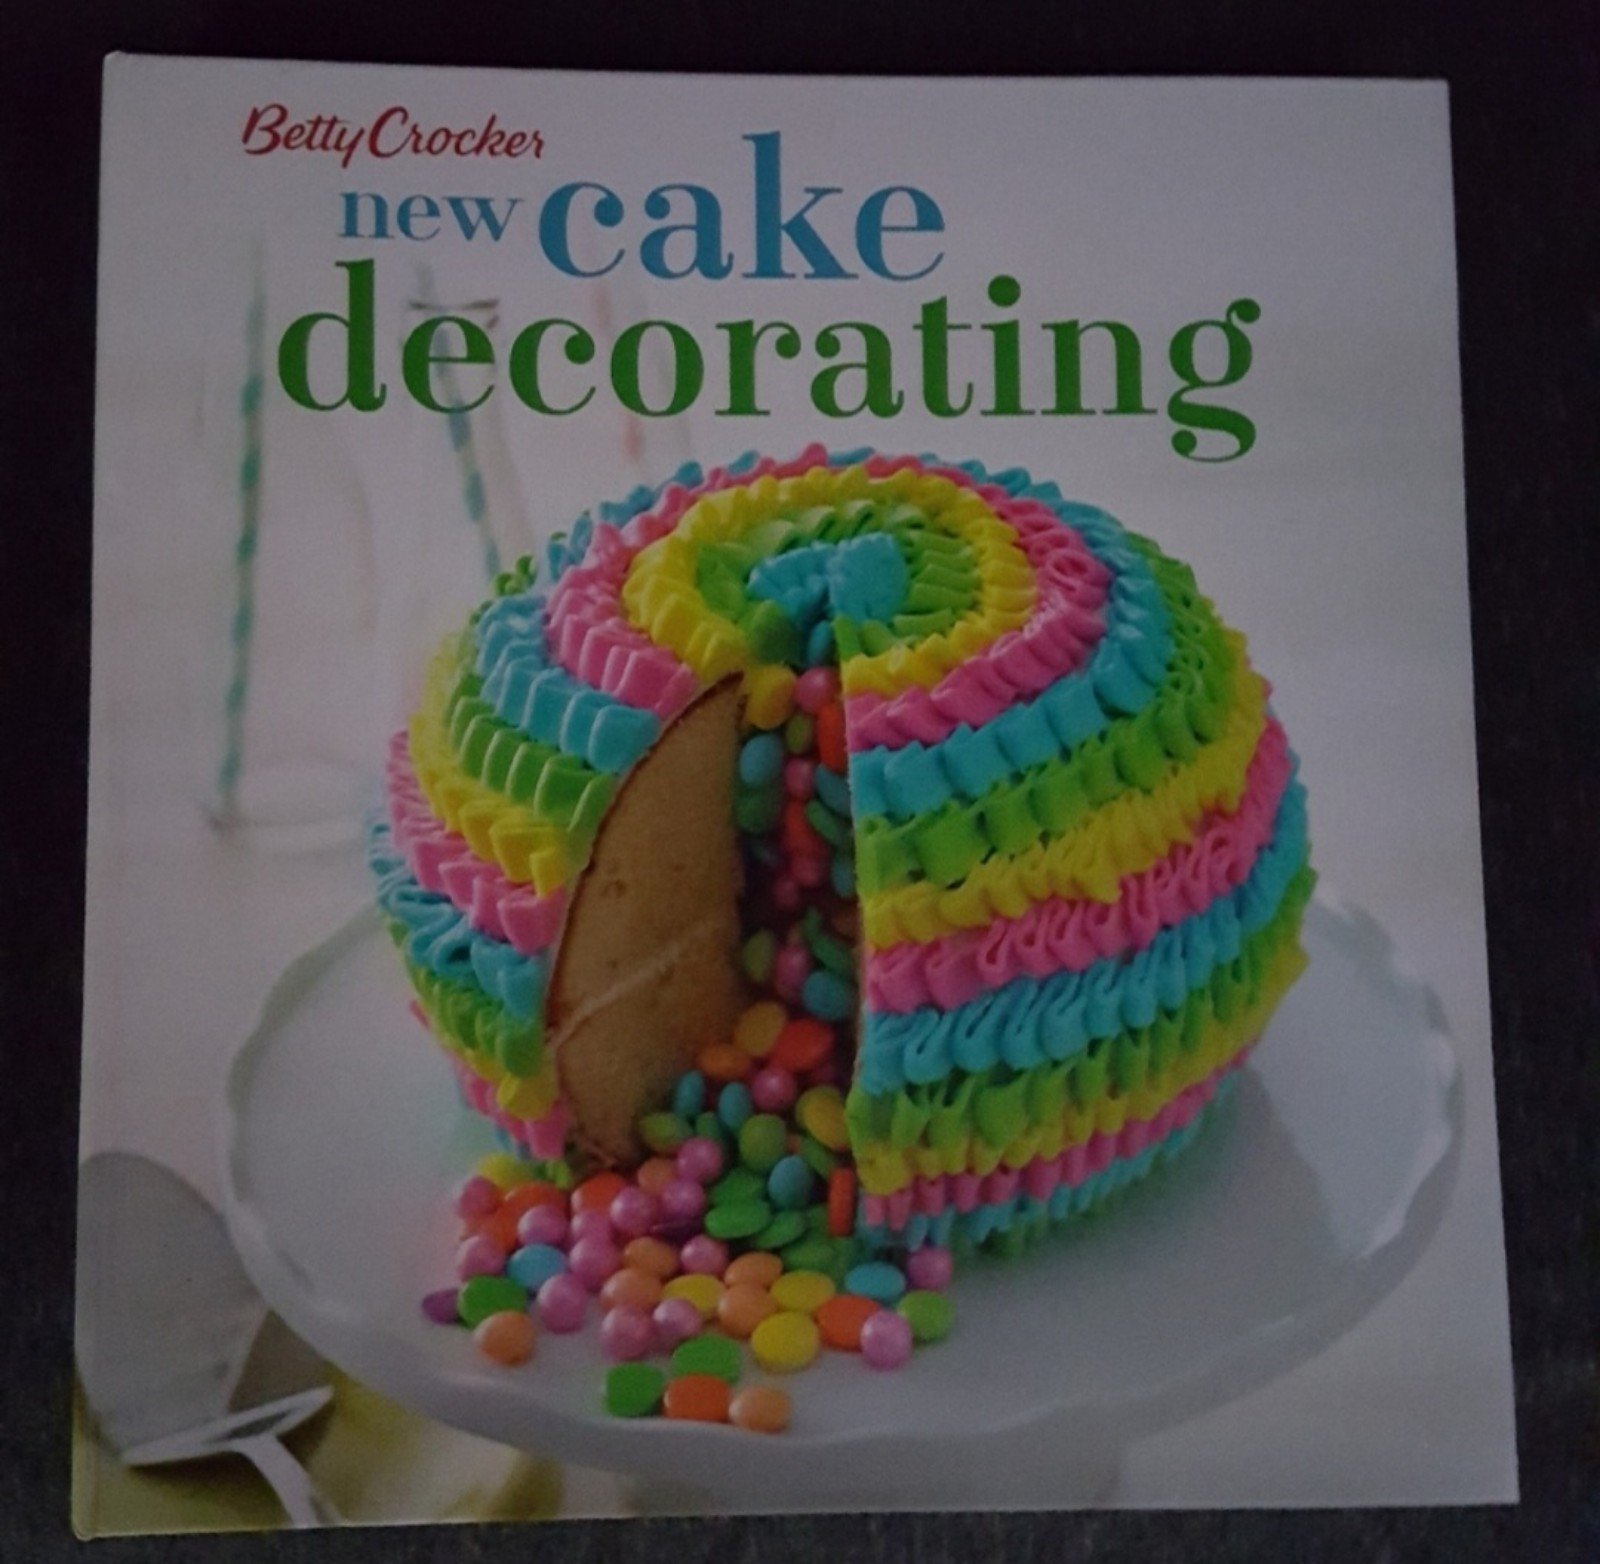 Betty Crocker Cake Decorating Cookbook jfe4husMe